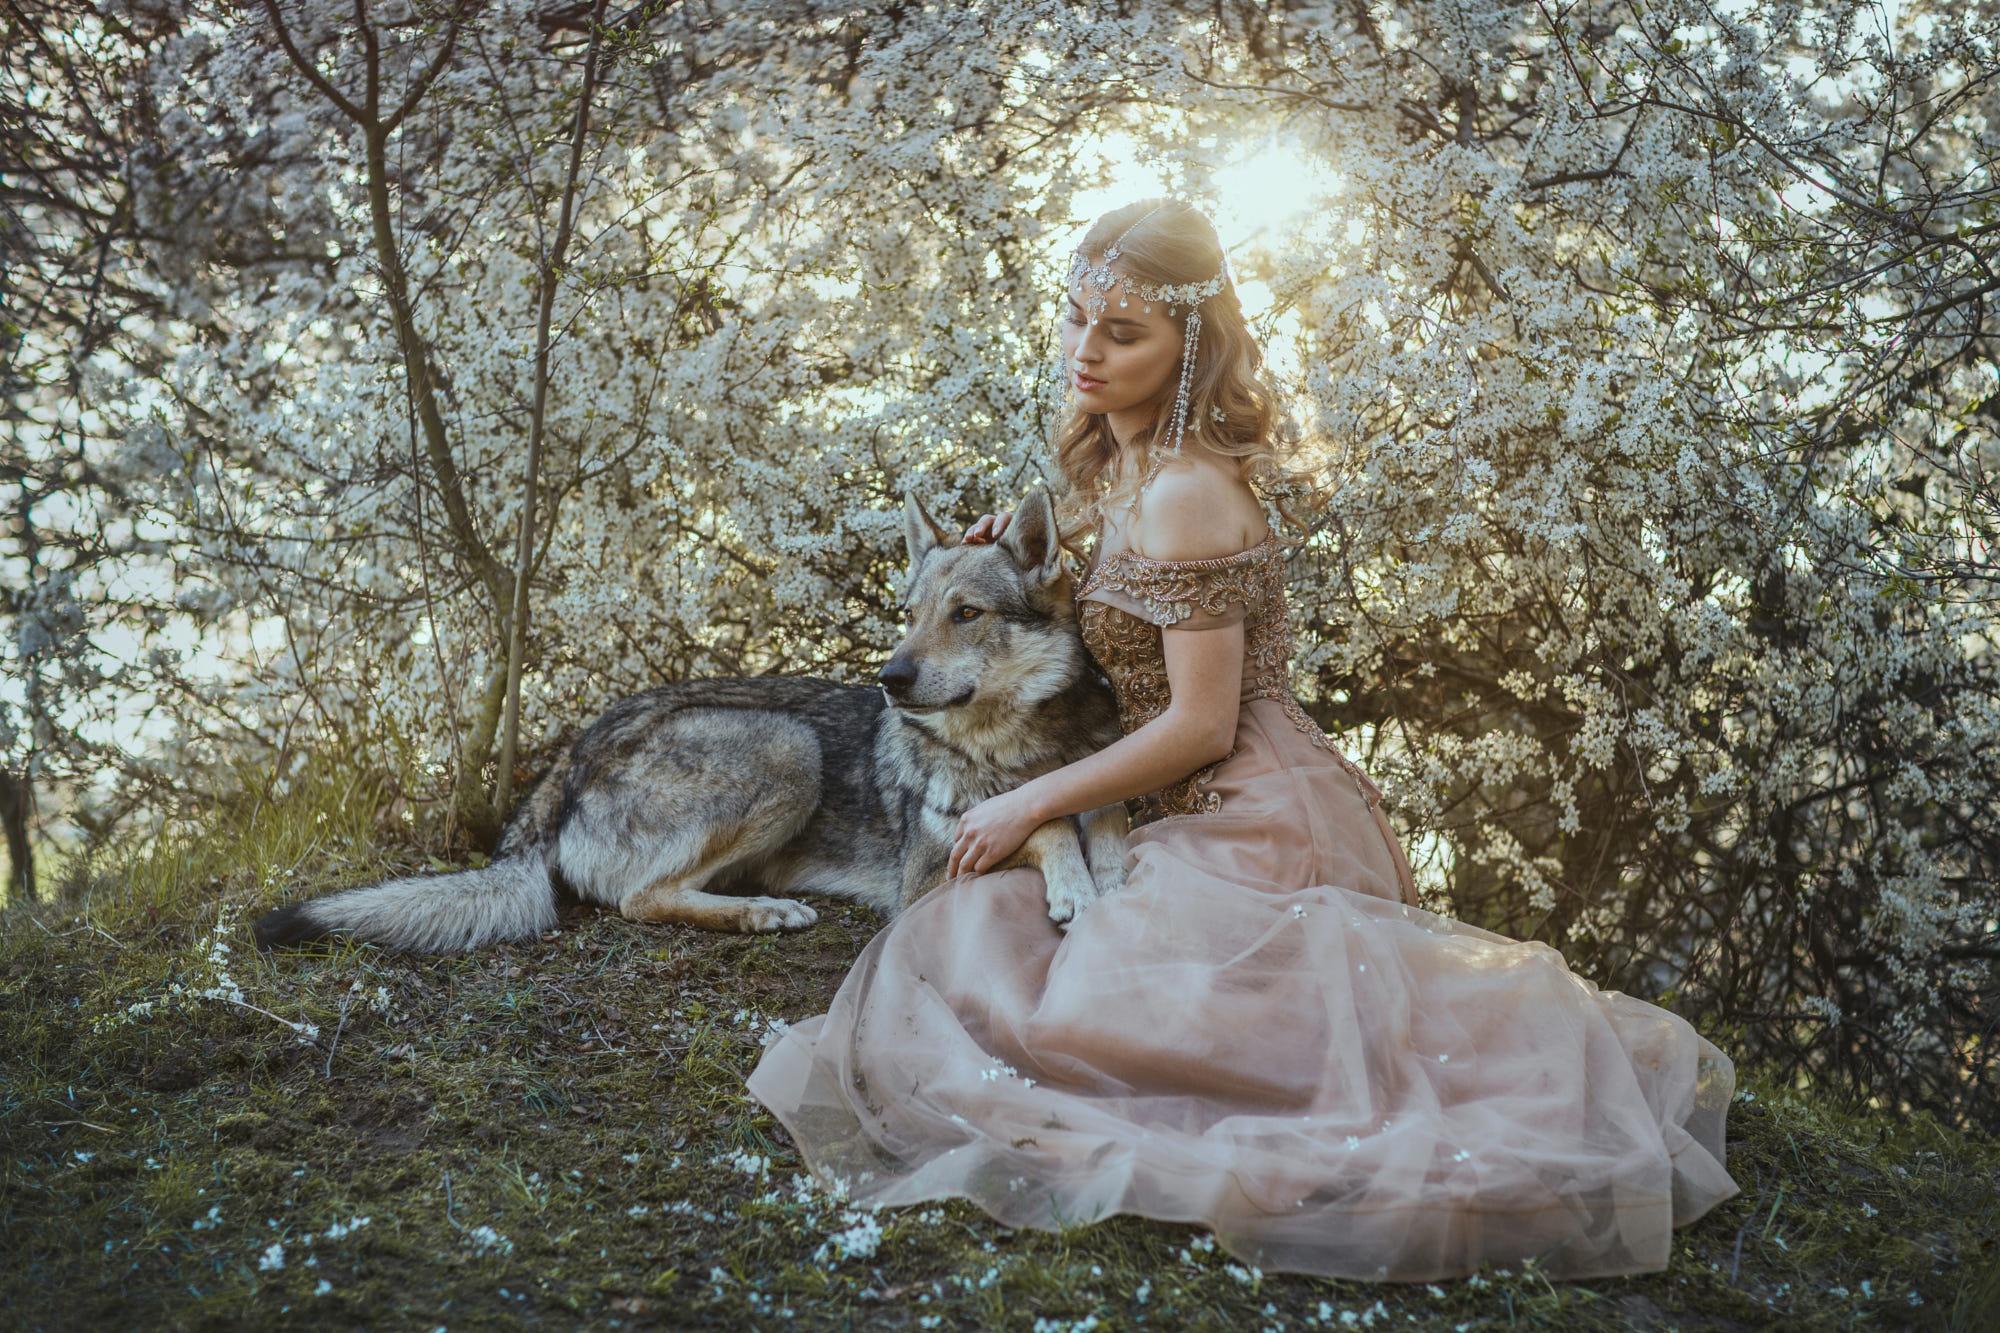 People 2000x1333 women model fantasy girl dog animals mammals dress women outdoors plants blonde czechoslovakian wolfdog